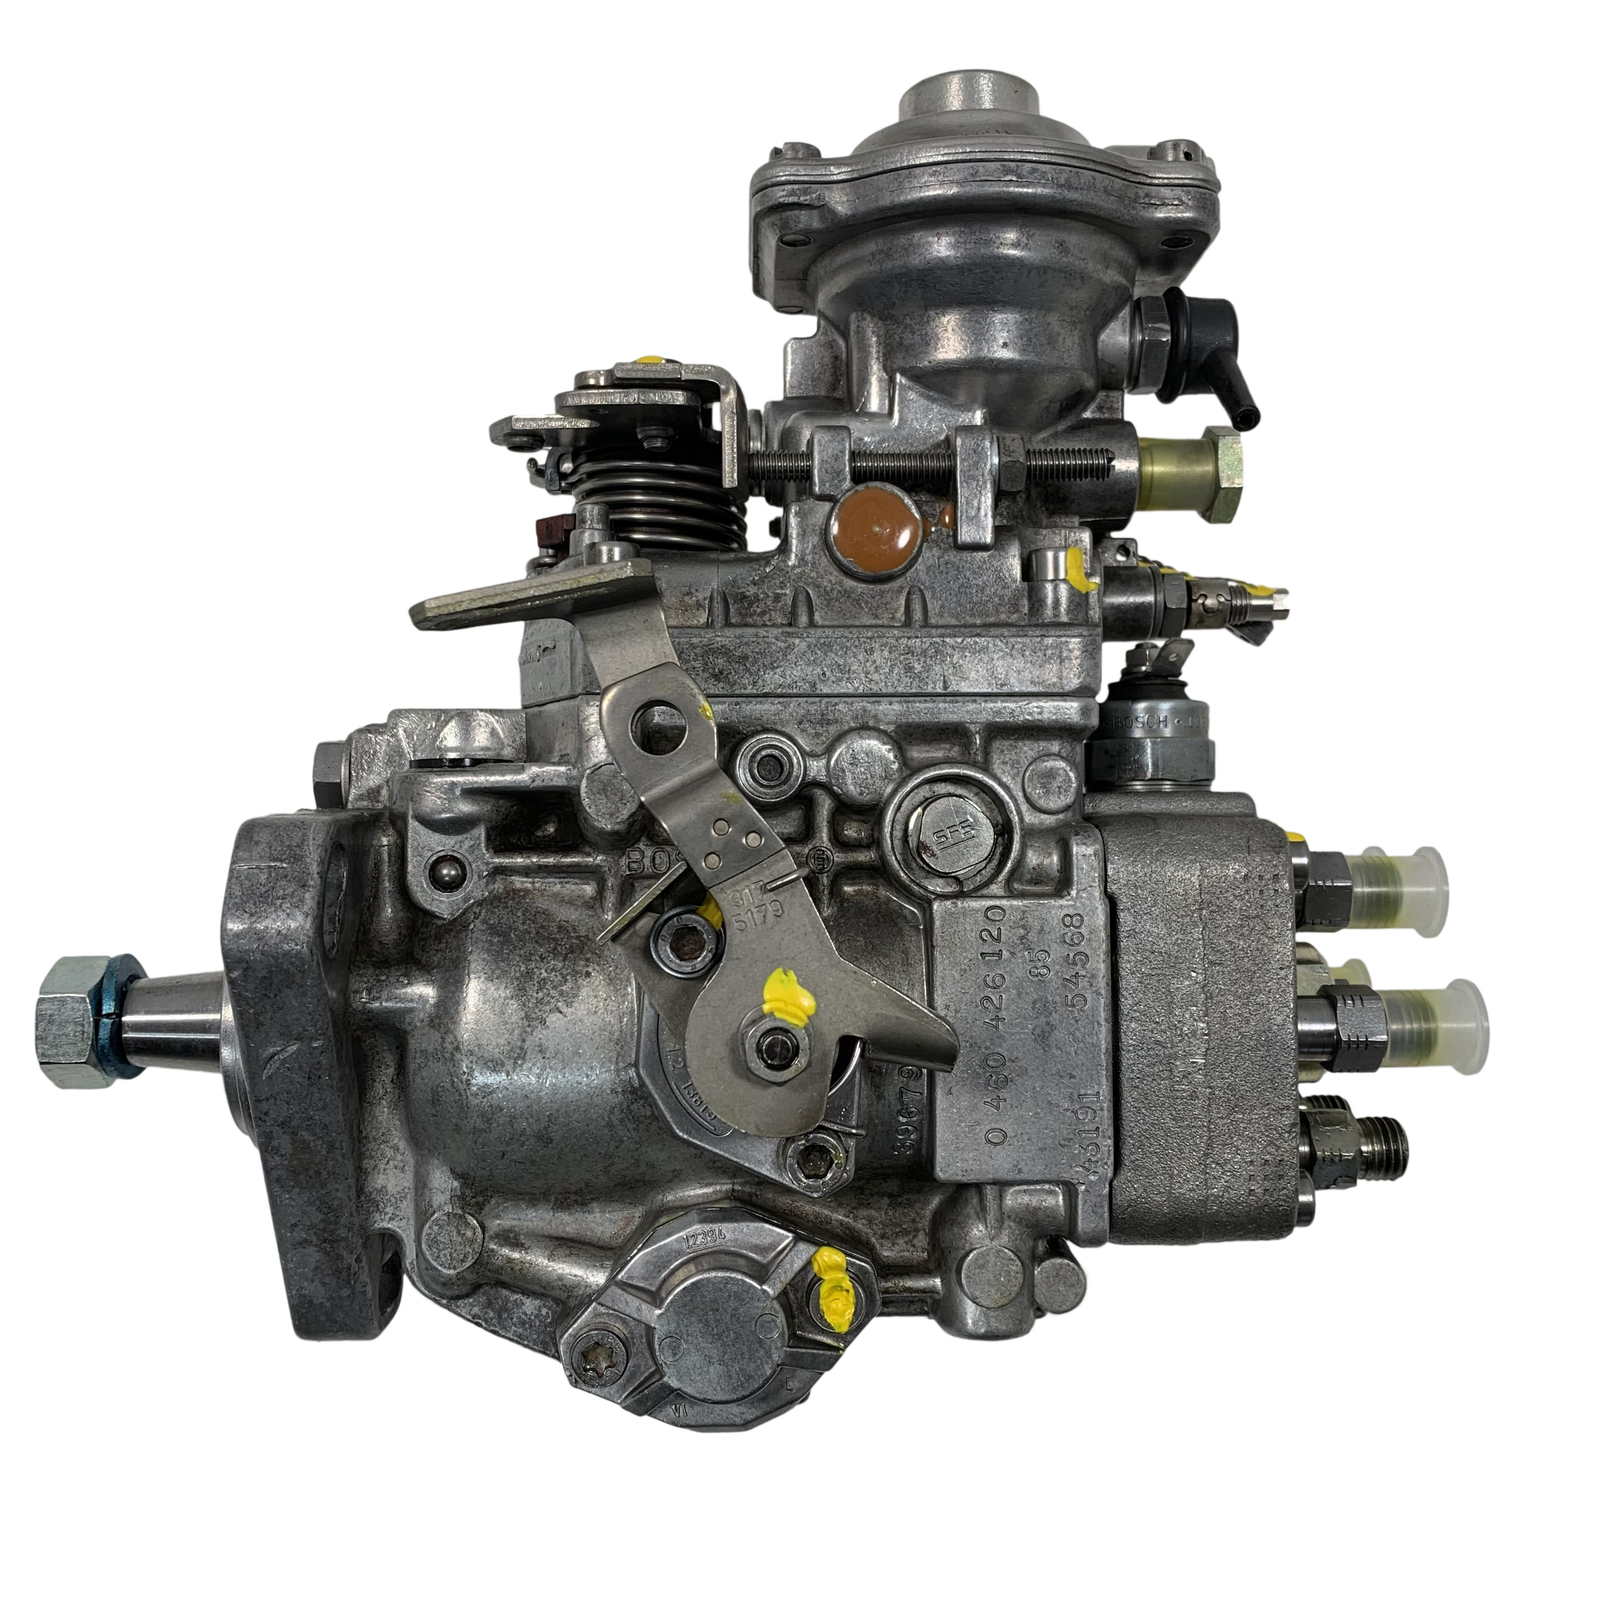 Primary image for VE6 Injection Pump Fits Cummins 6BT 5.9L 132kW Diesel Engine 0-460-426-130